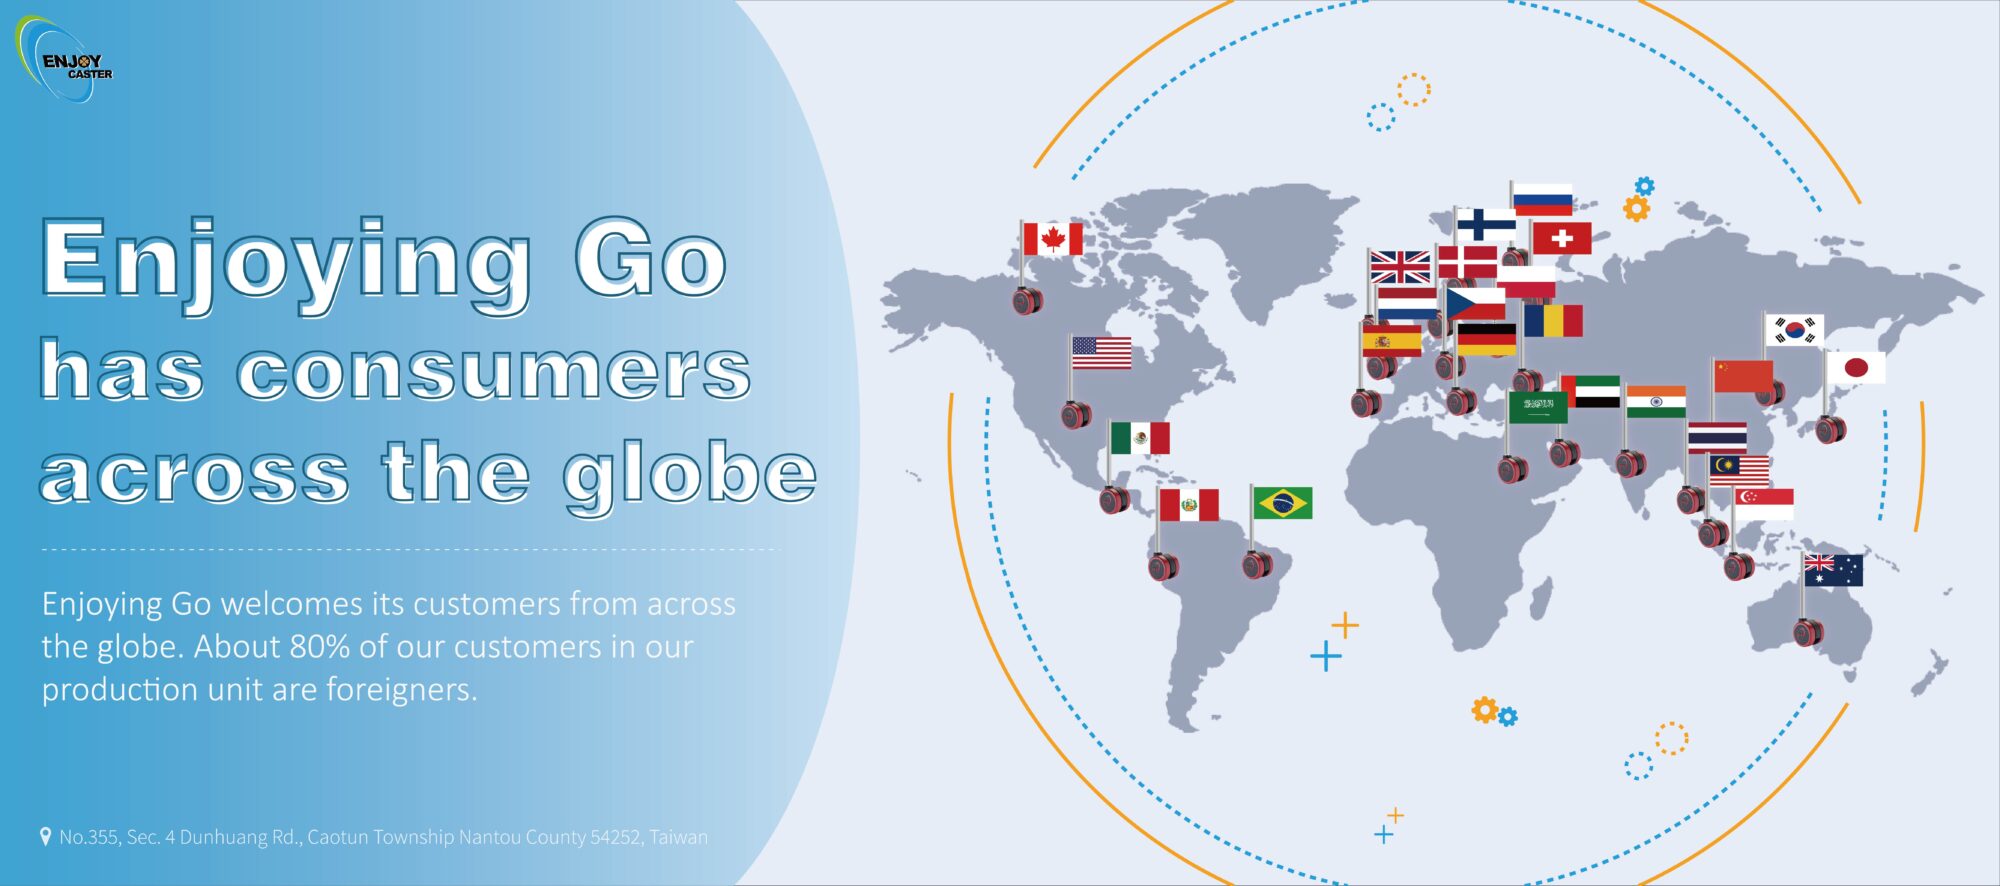 Enjoying Go has consumers across the globe.